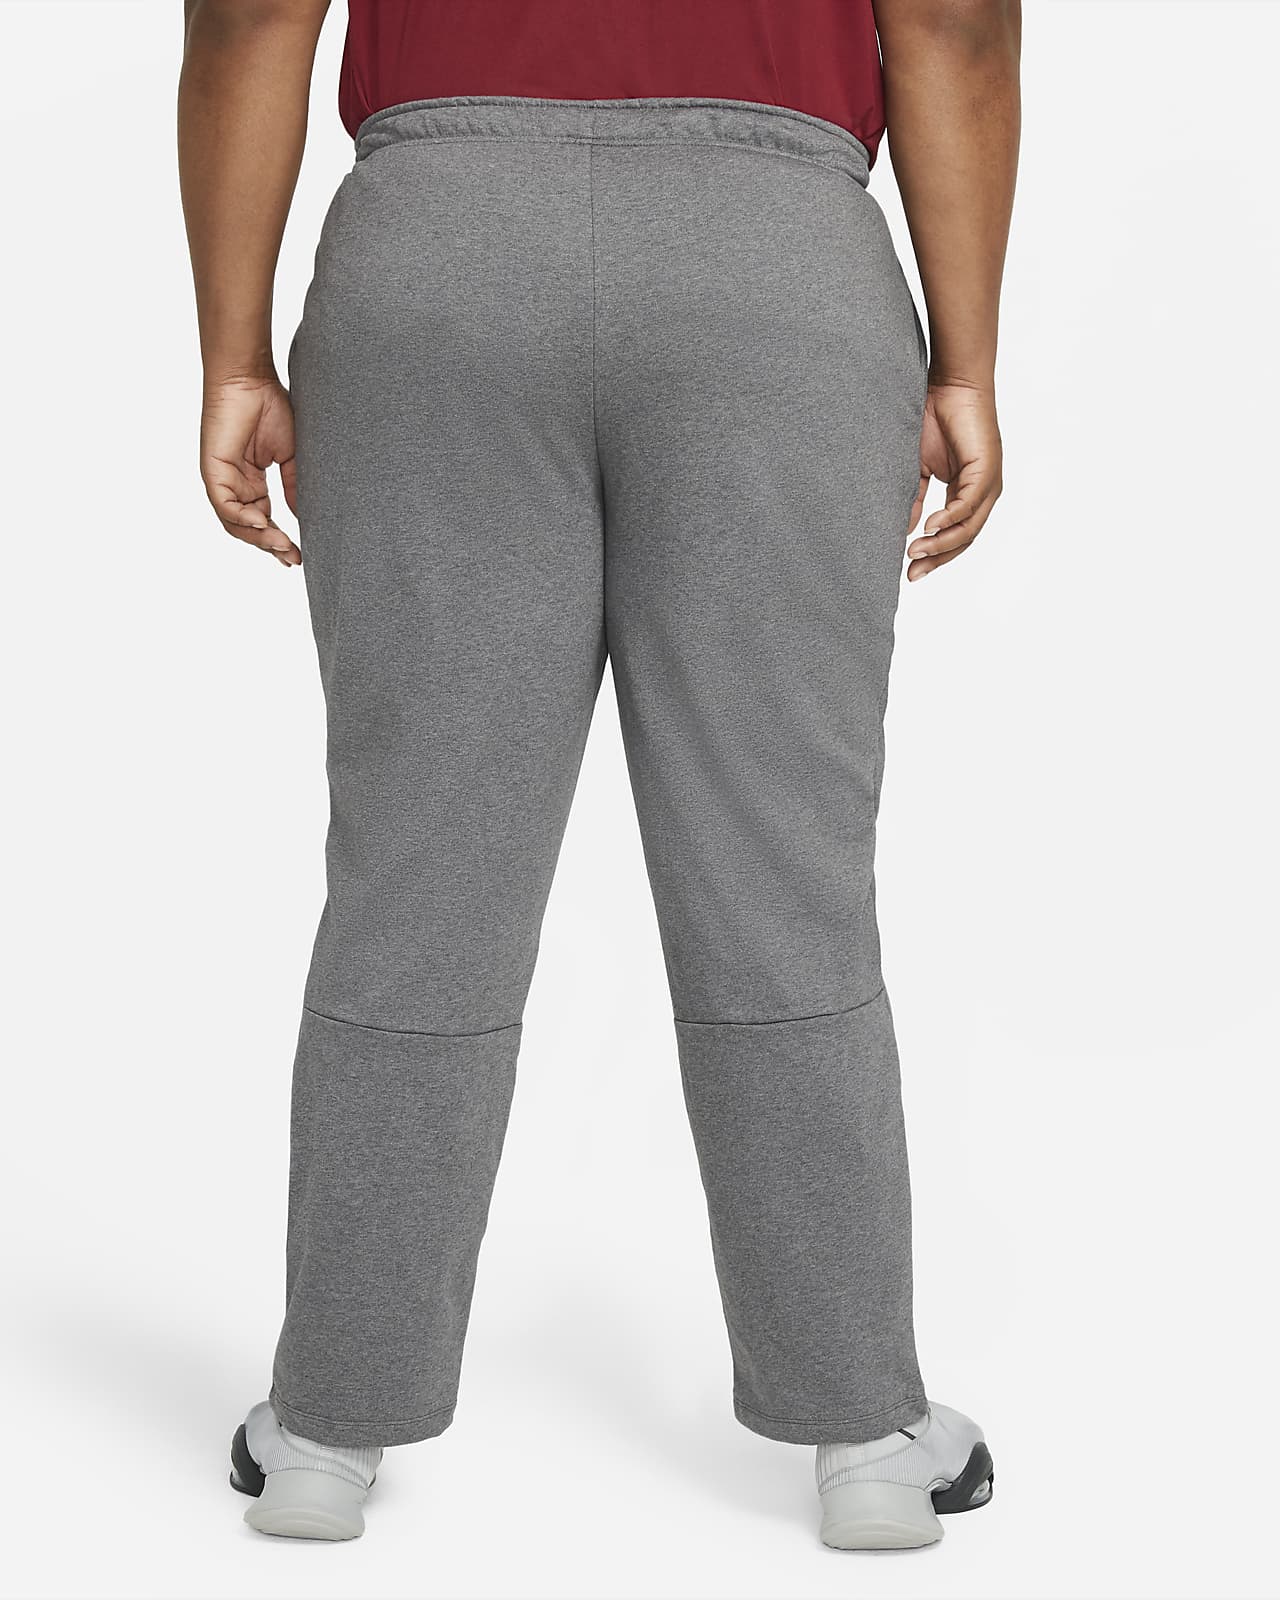 Nike Dri-FIT Men's Training Pants (Big 